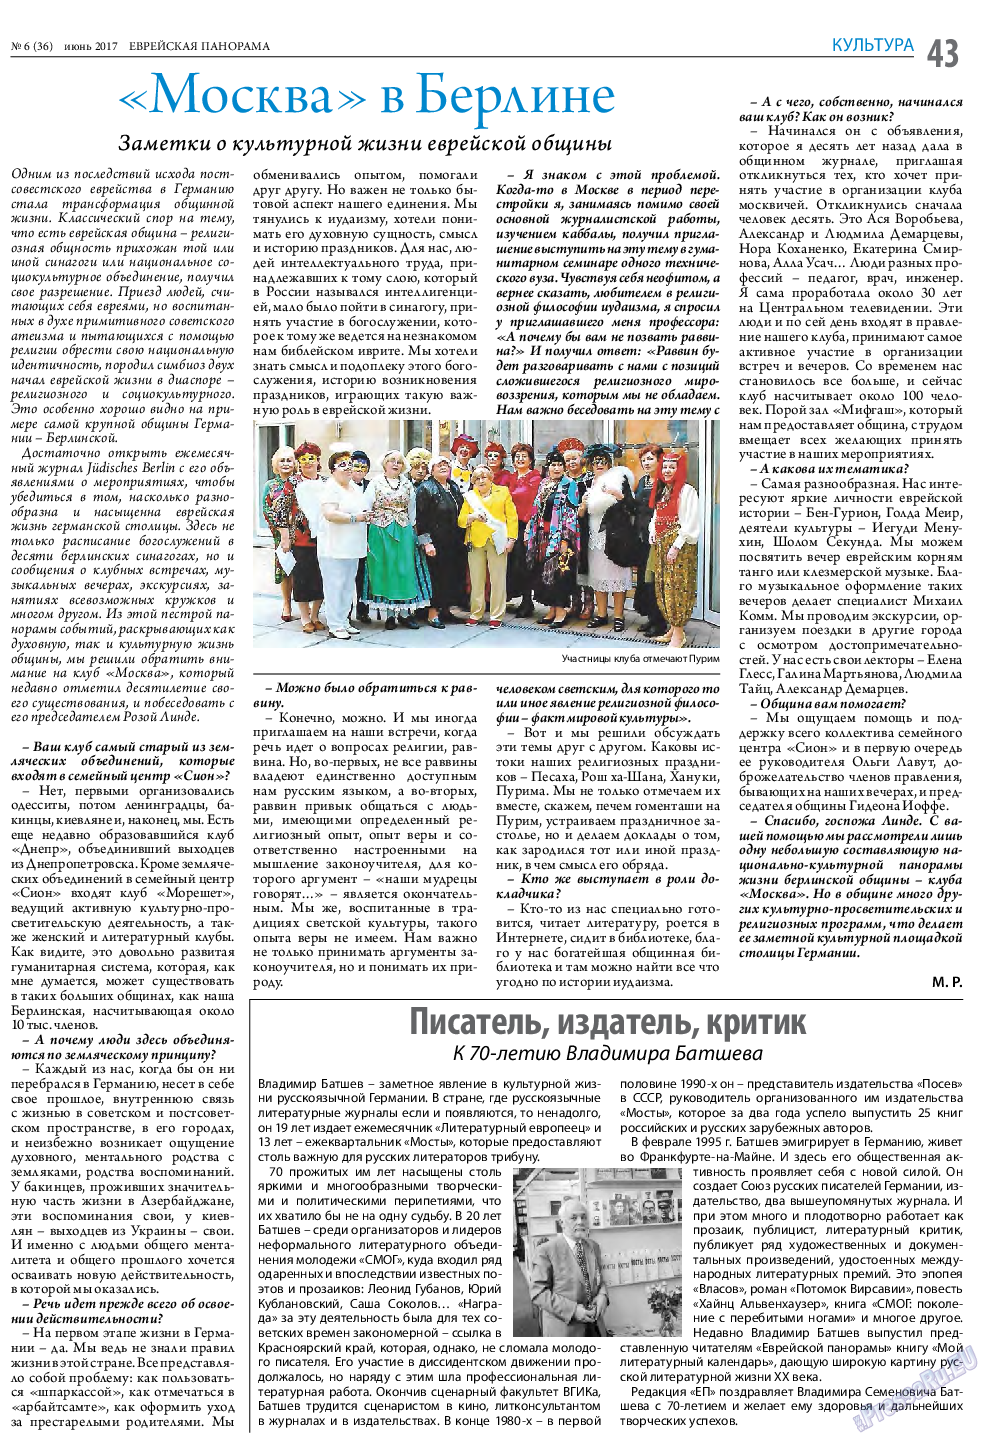 Еврейская панорама, газета. 2017 №6 стр.43